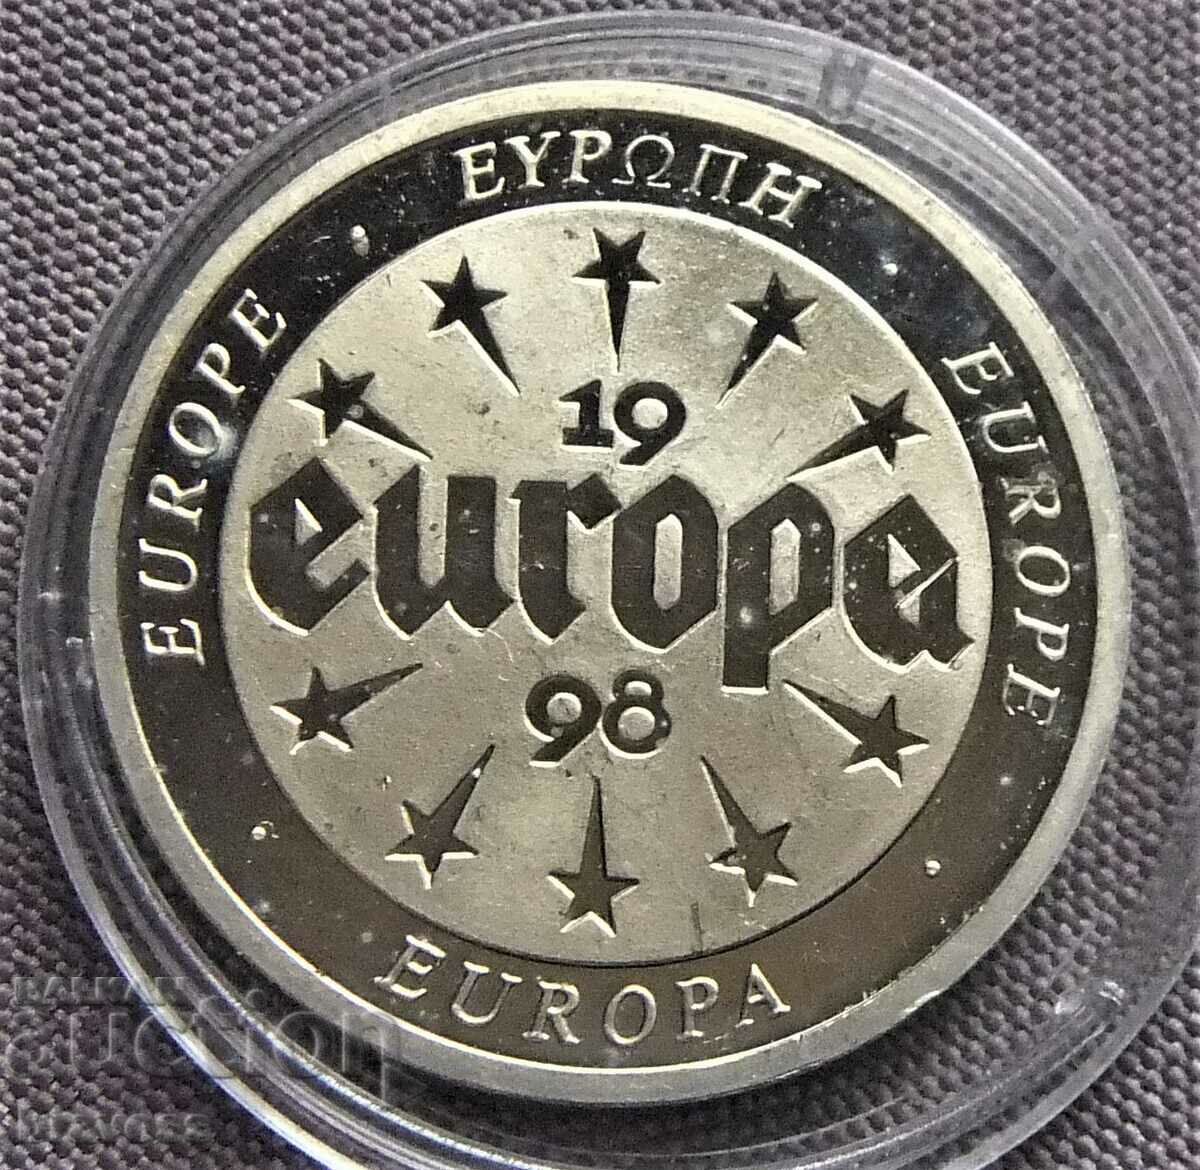 Germania - 10 euro - 1998